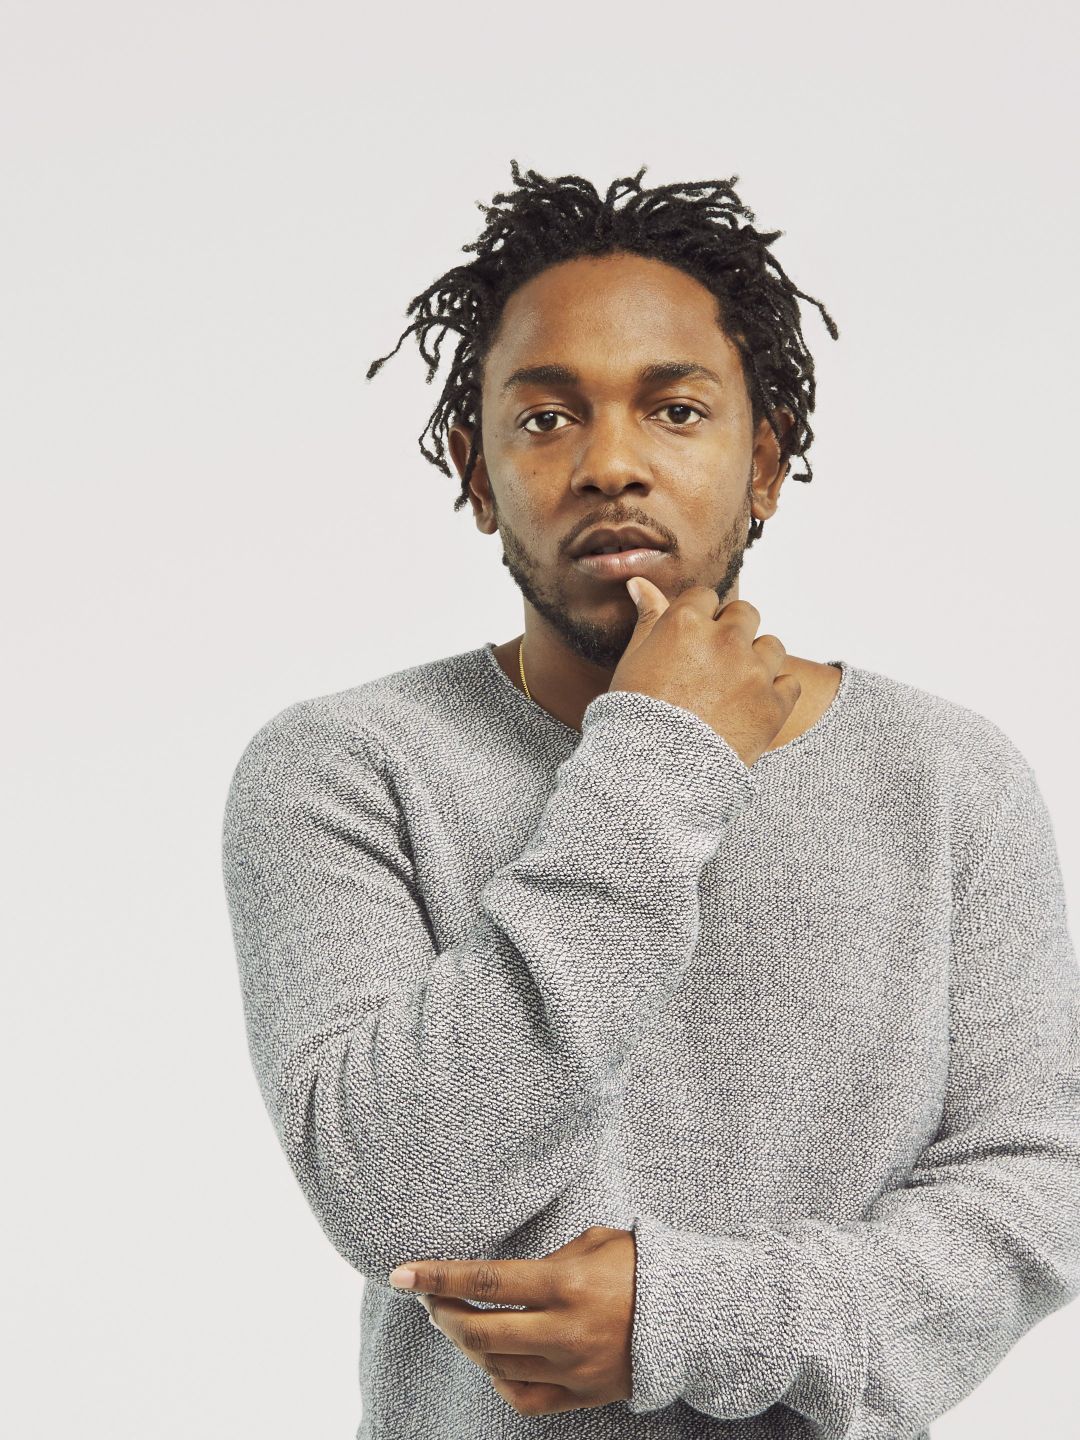 Kendrick Lamar place of birth